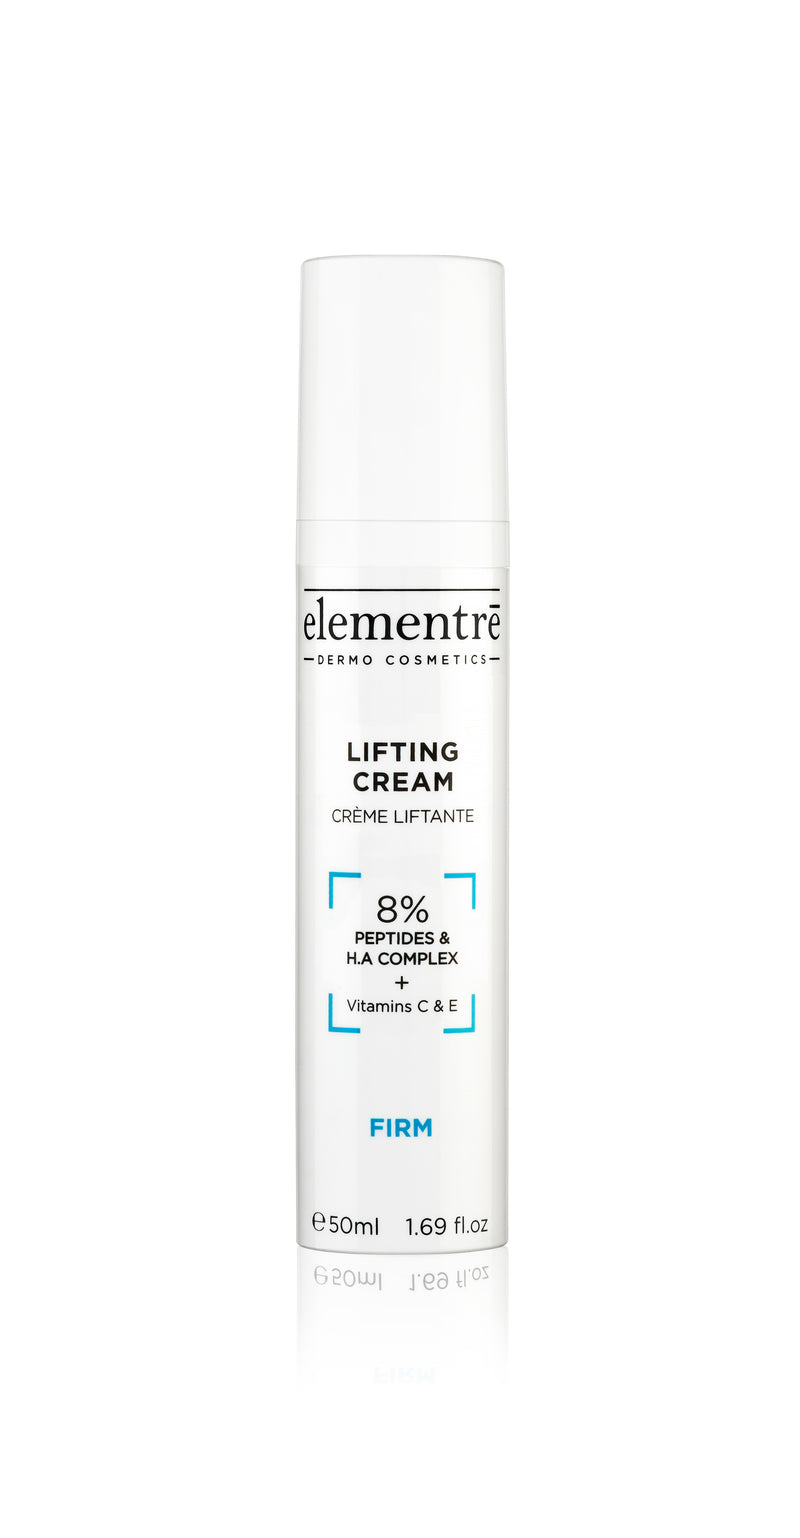 Elementre Dermo Cosmetics Lifting Cream 50ml